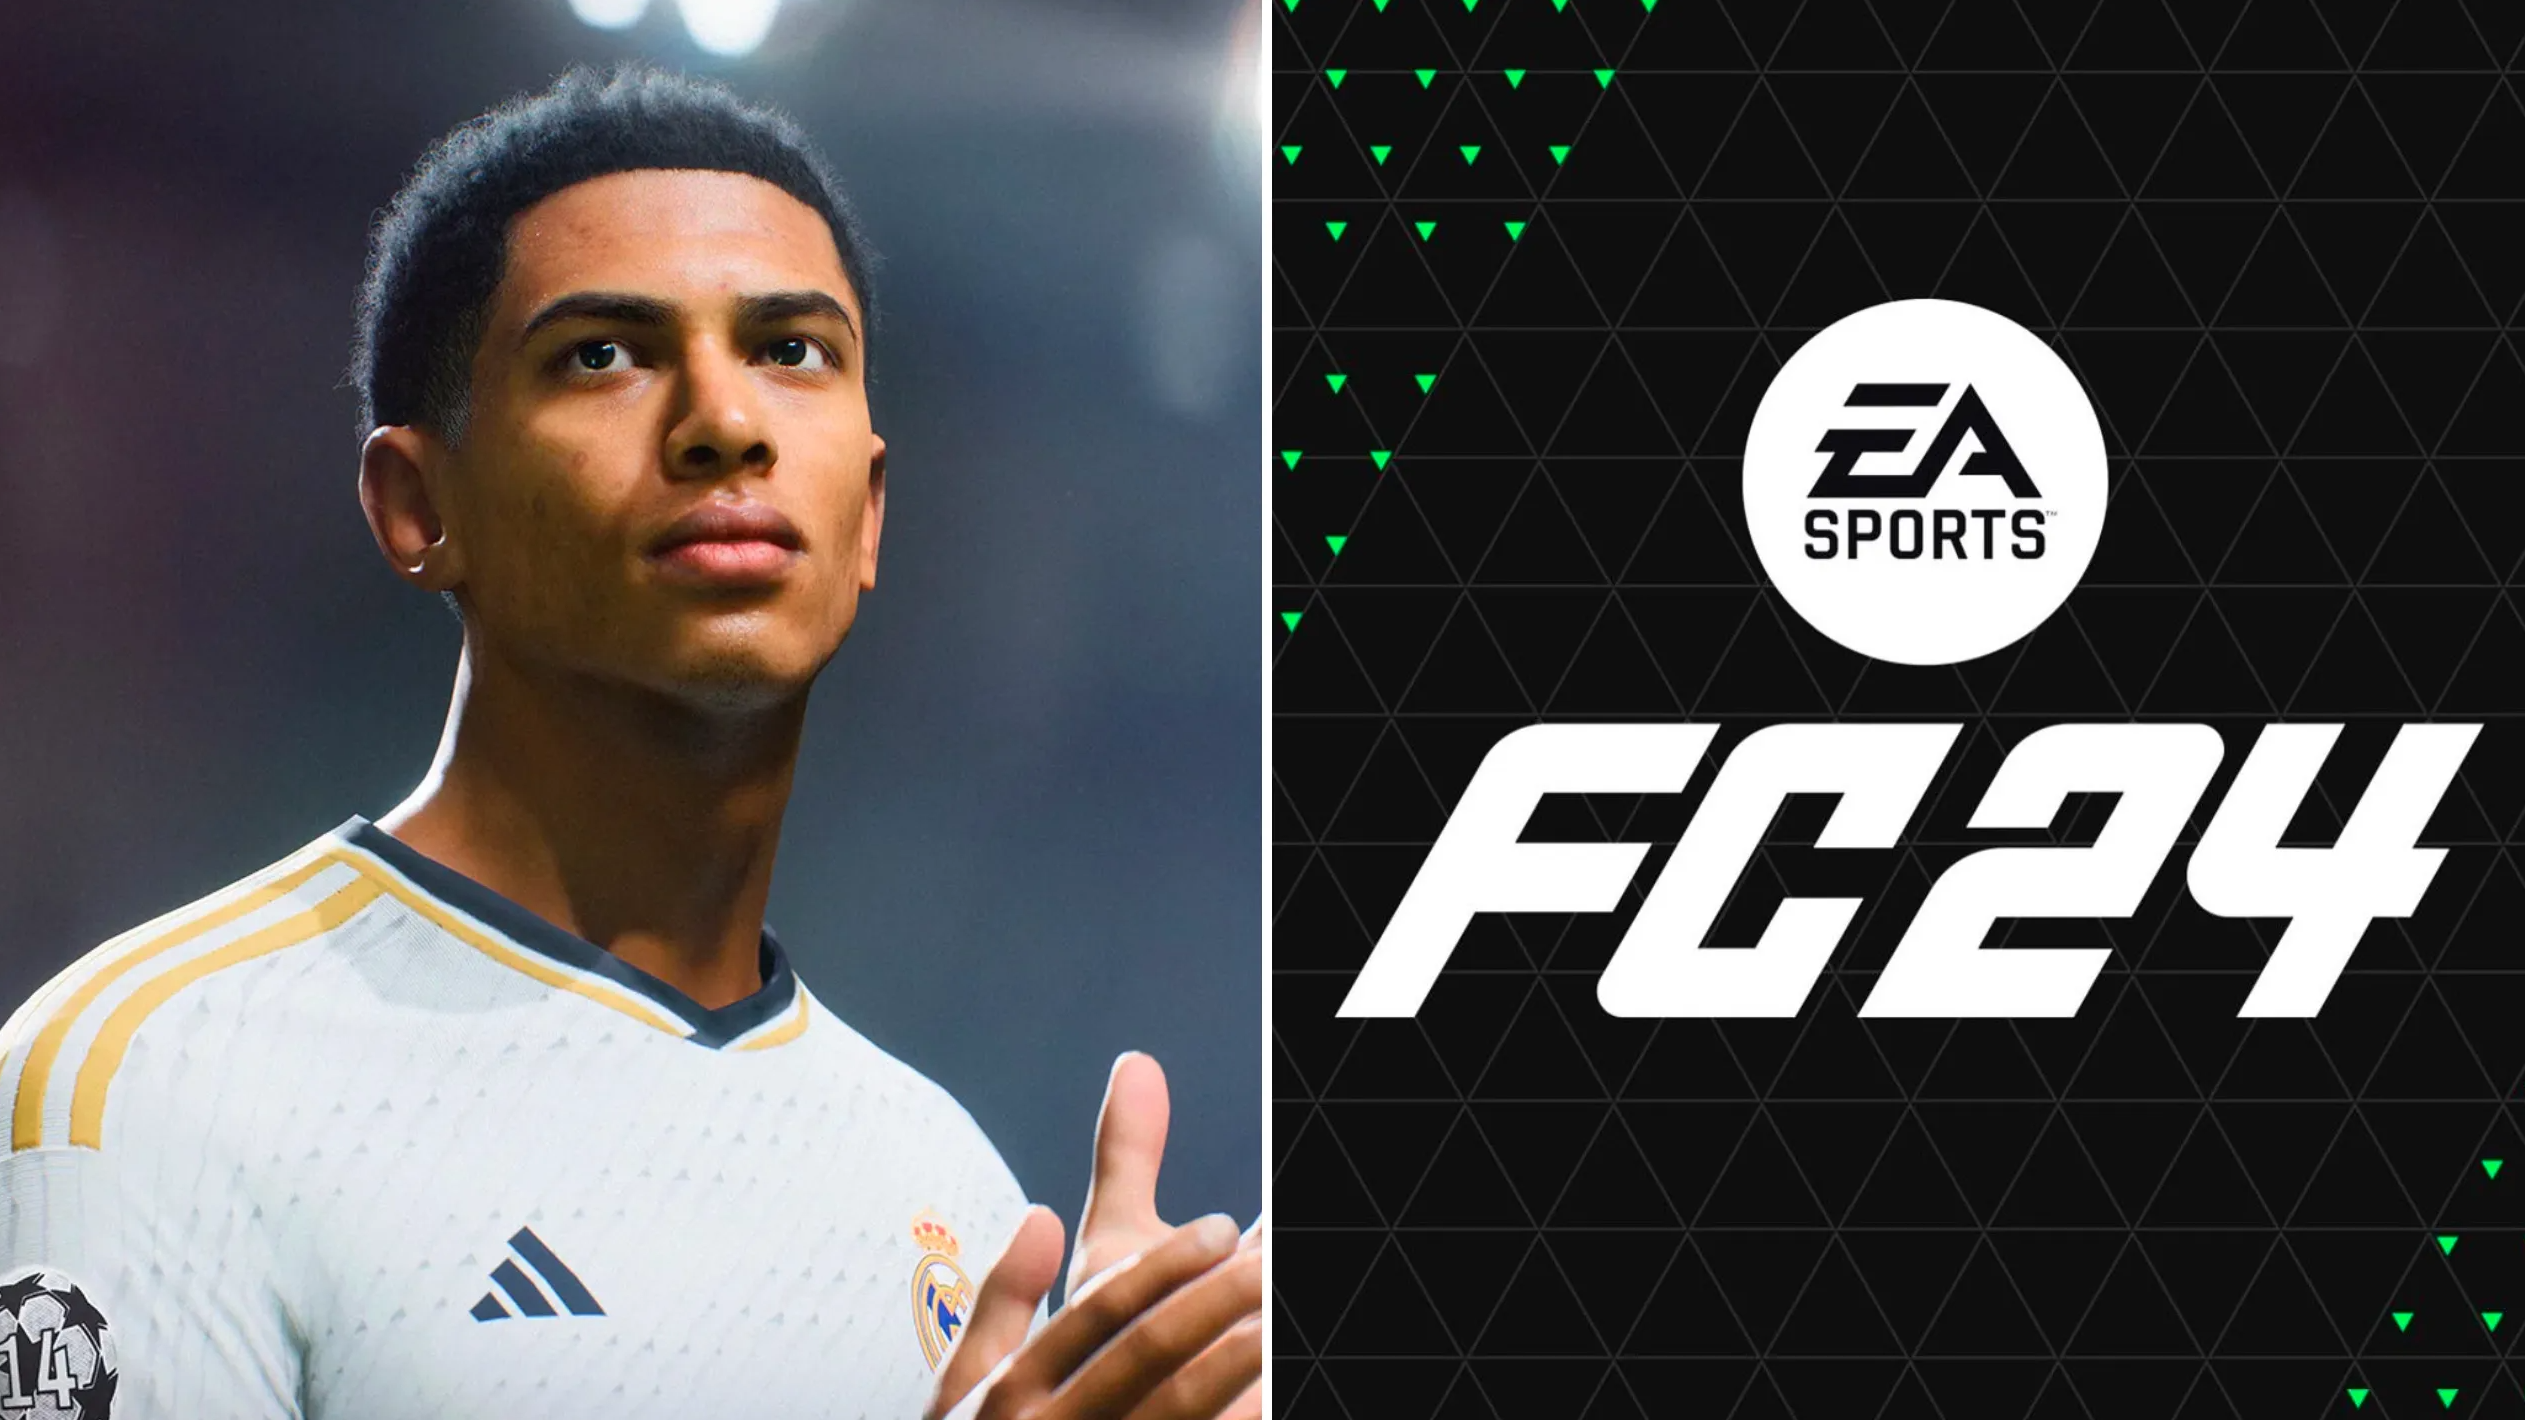 EA Sports FC 24 Ultimate Team Guide